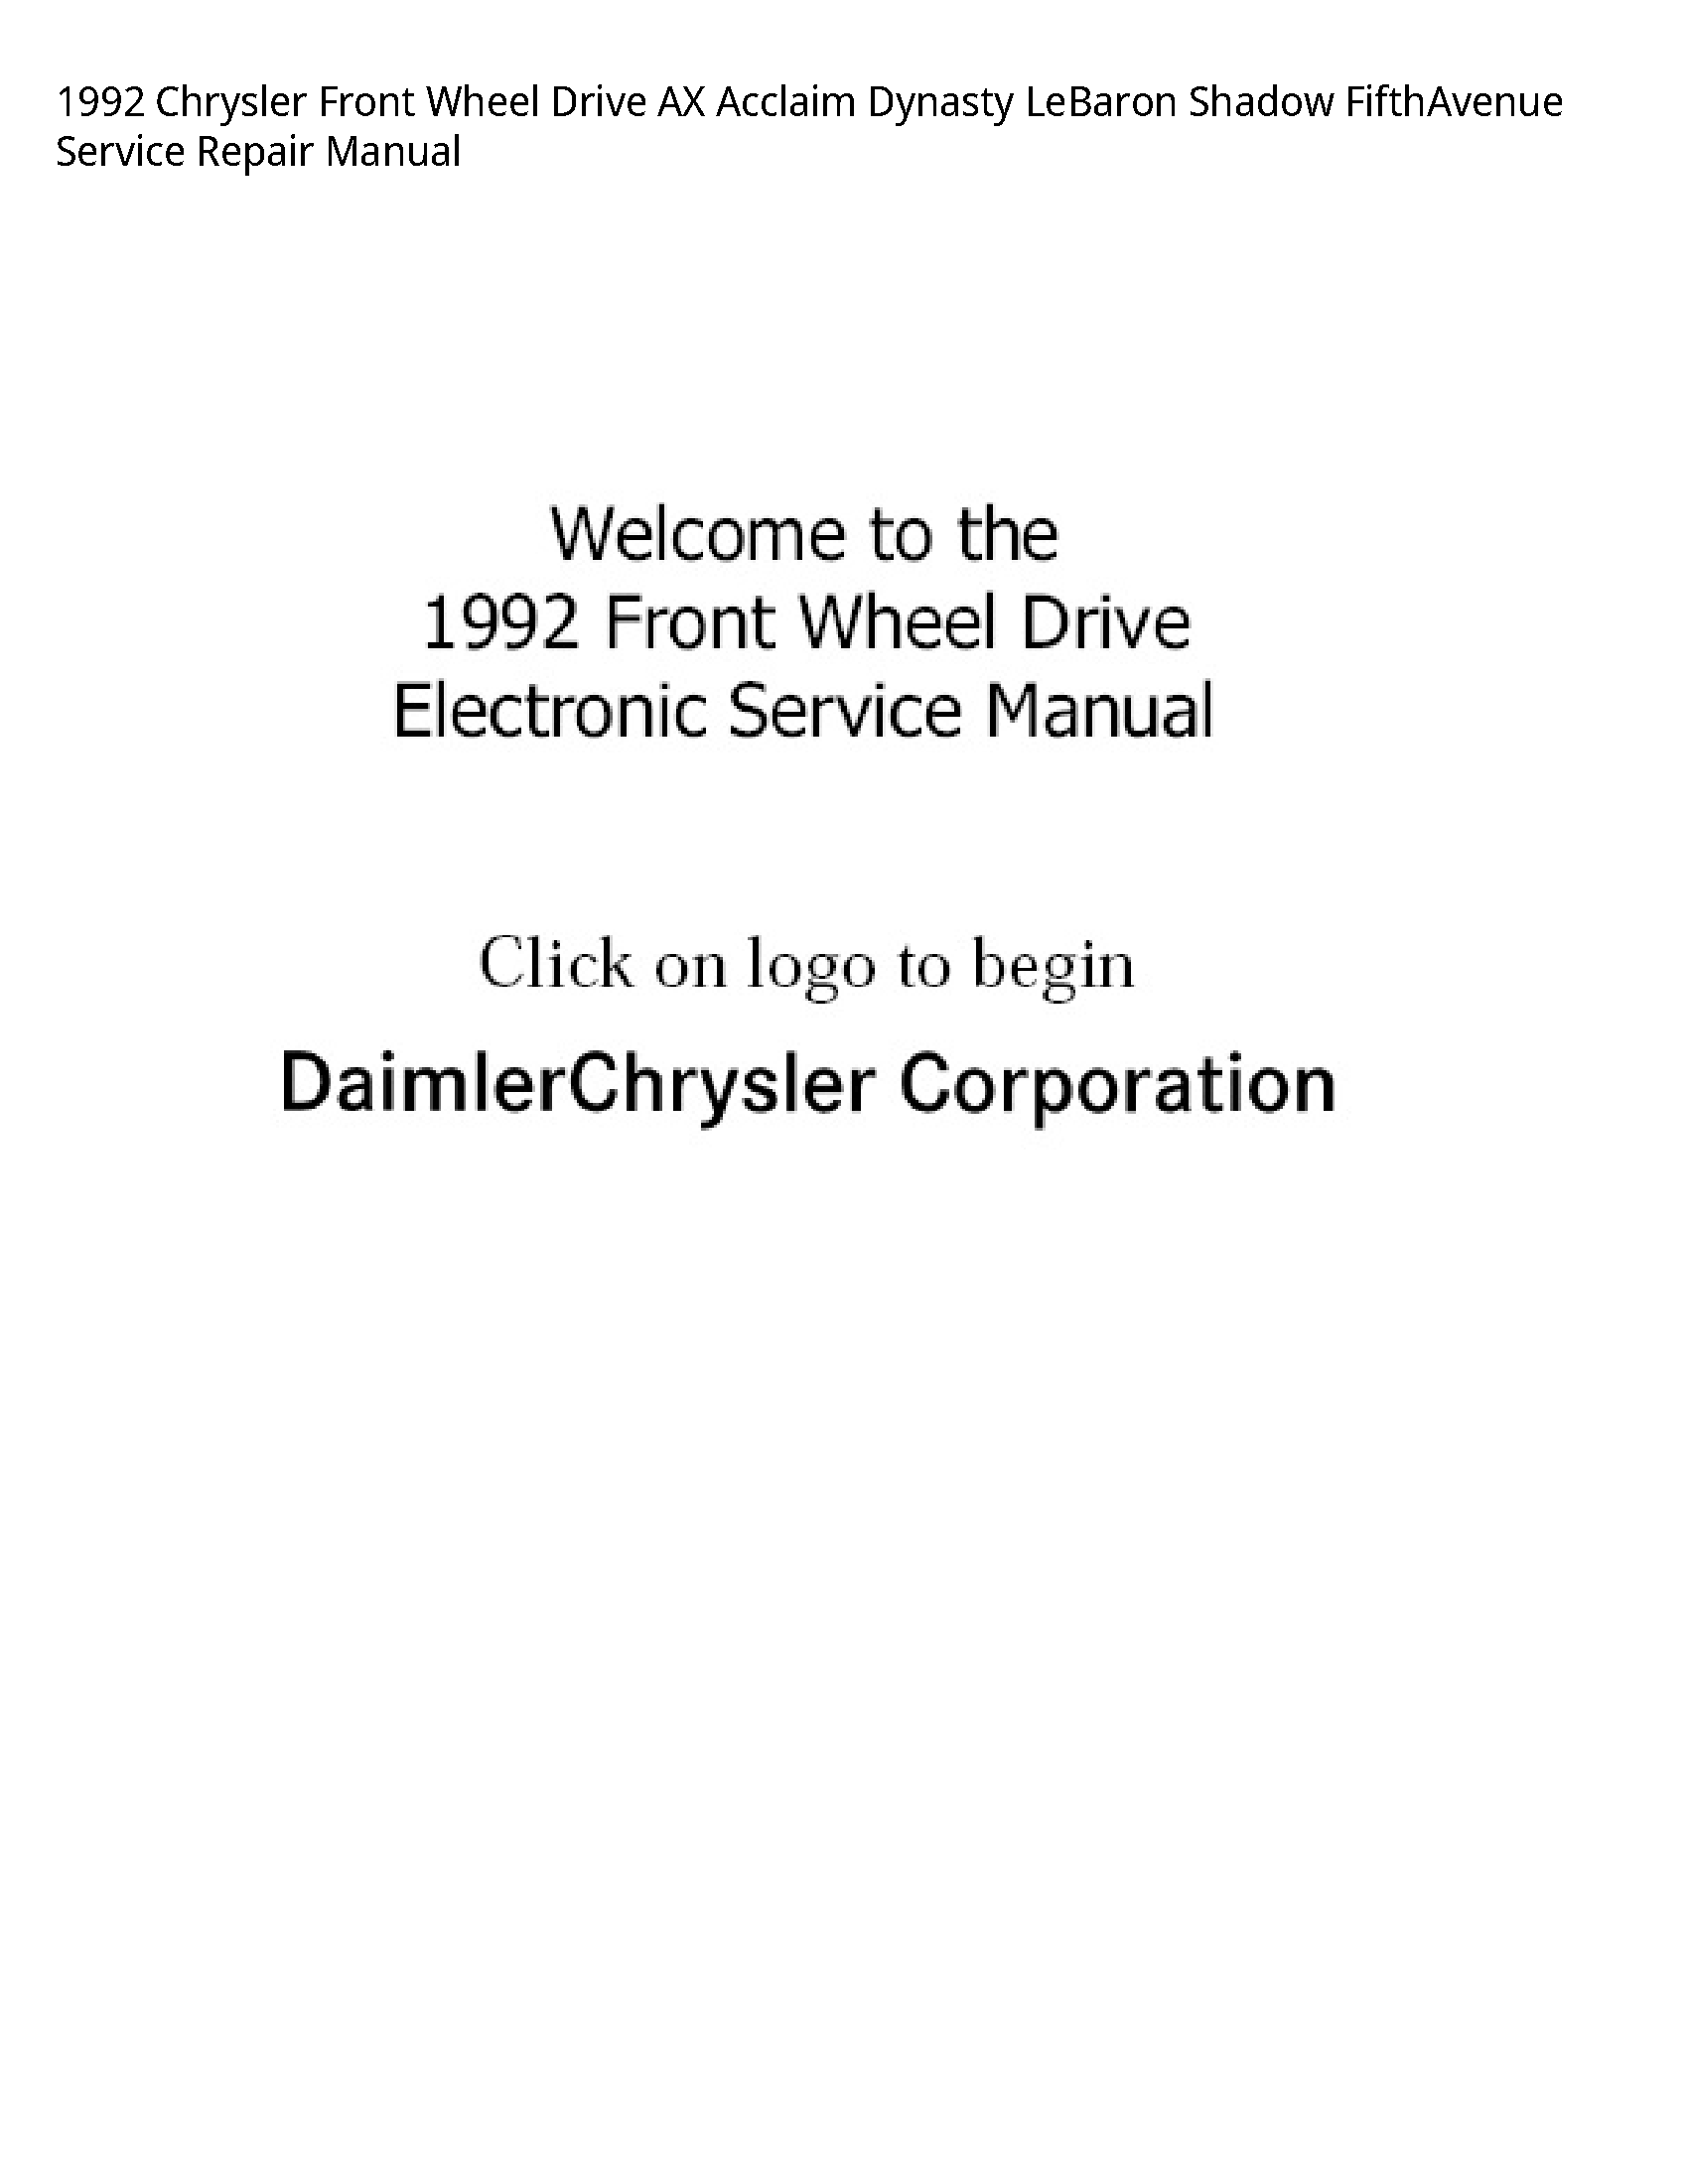 Chrysler Front Wheel Drive AX Acclaim Dynasty LeBaron Shadow FifthAvenue manual